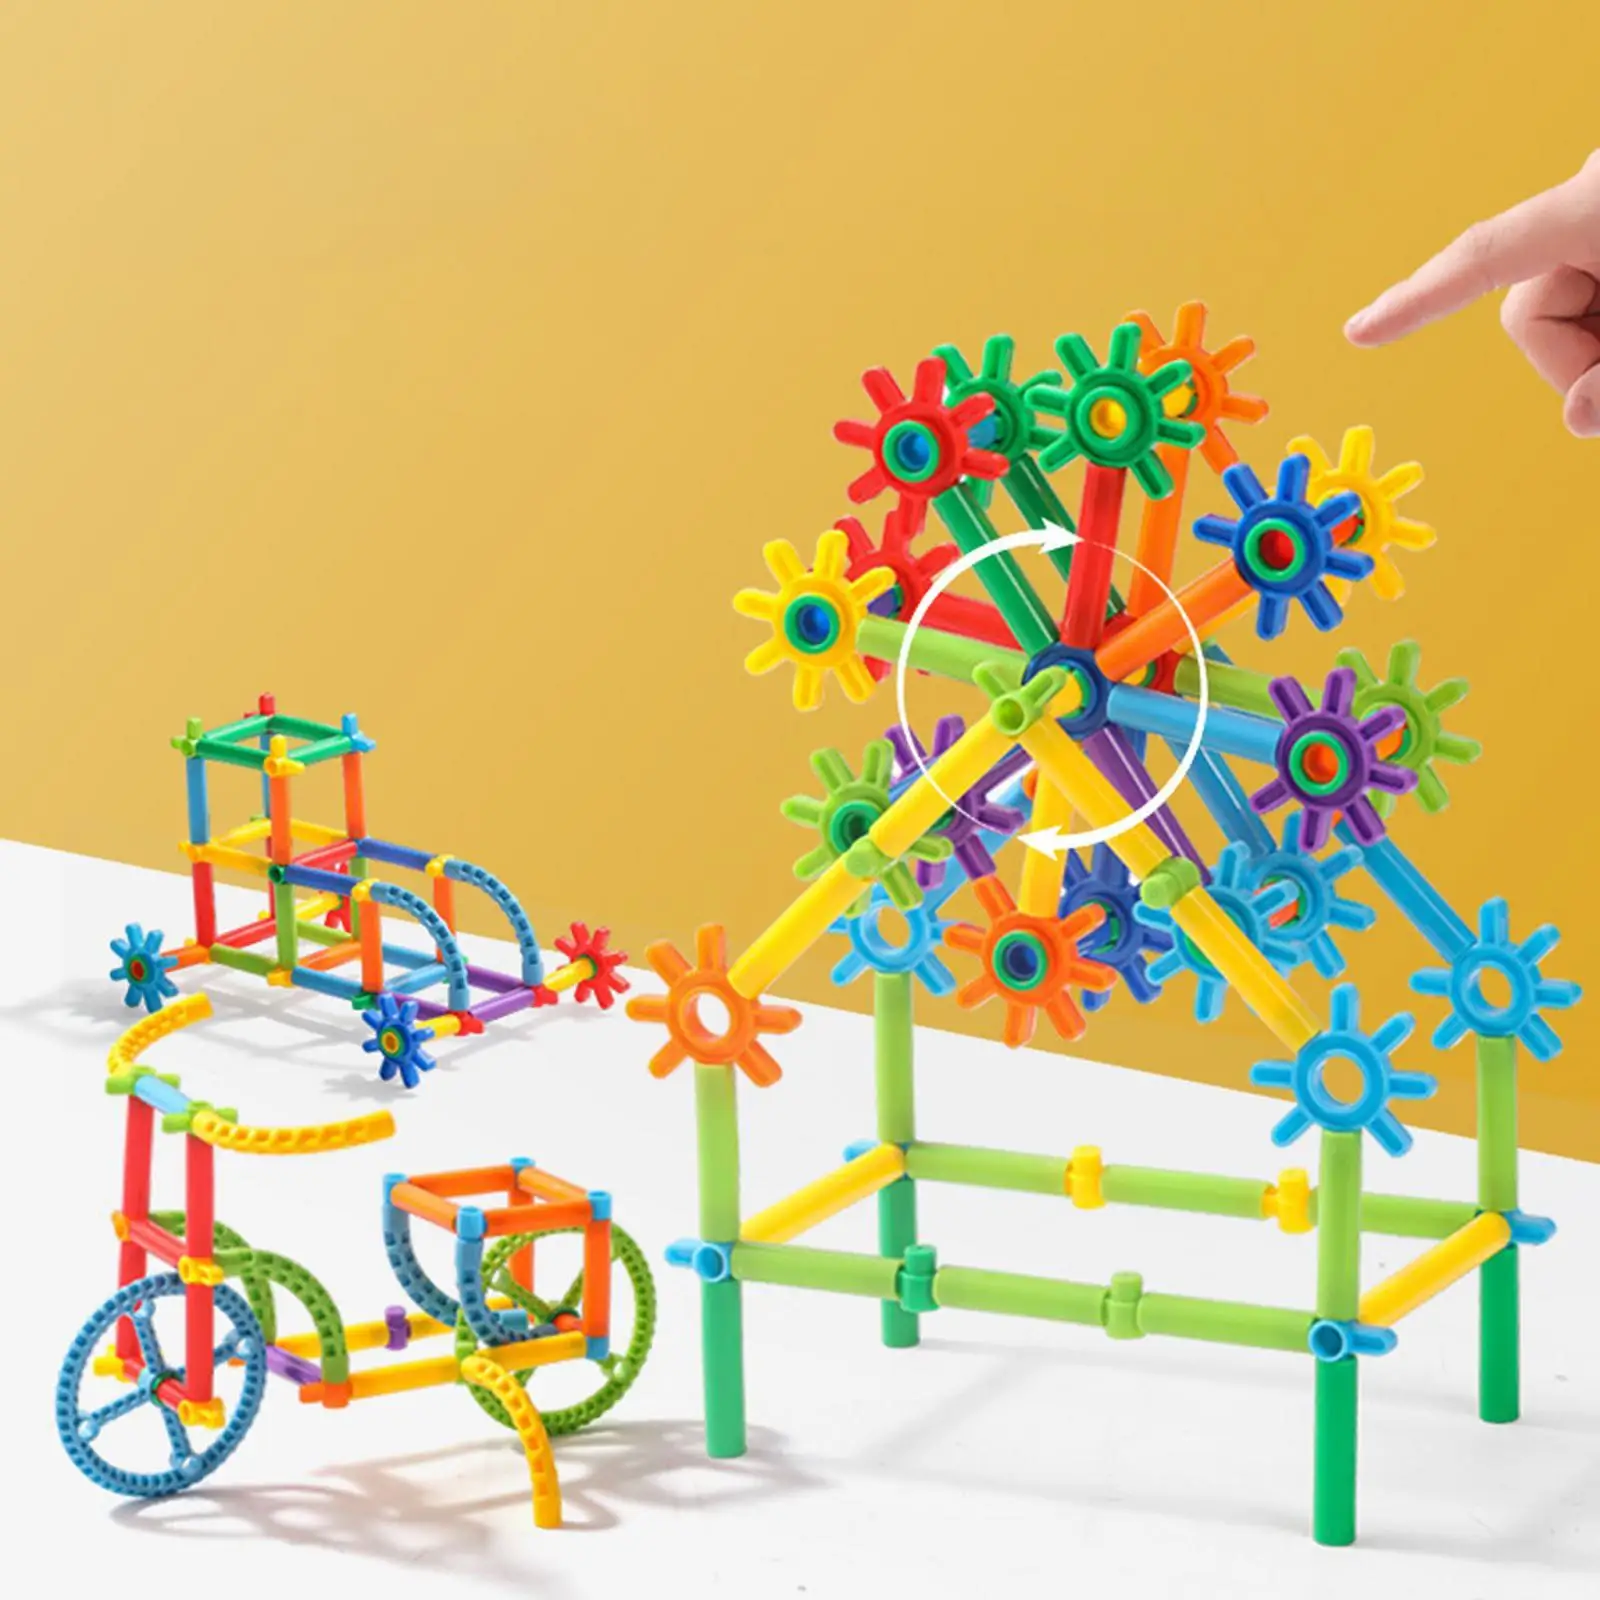 Educational Interlocking Sticks Creativity Stem Construction Building Toys for Boys Girls Preschool Kids Children Birthday Gift